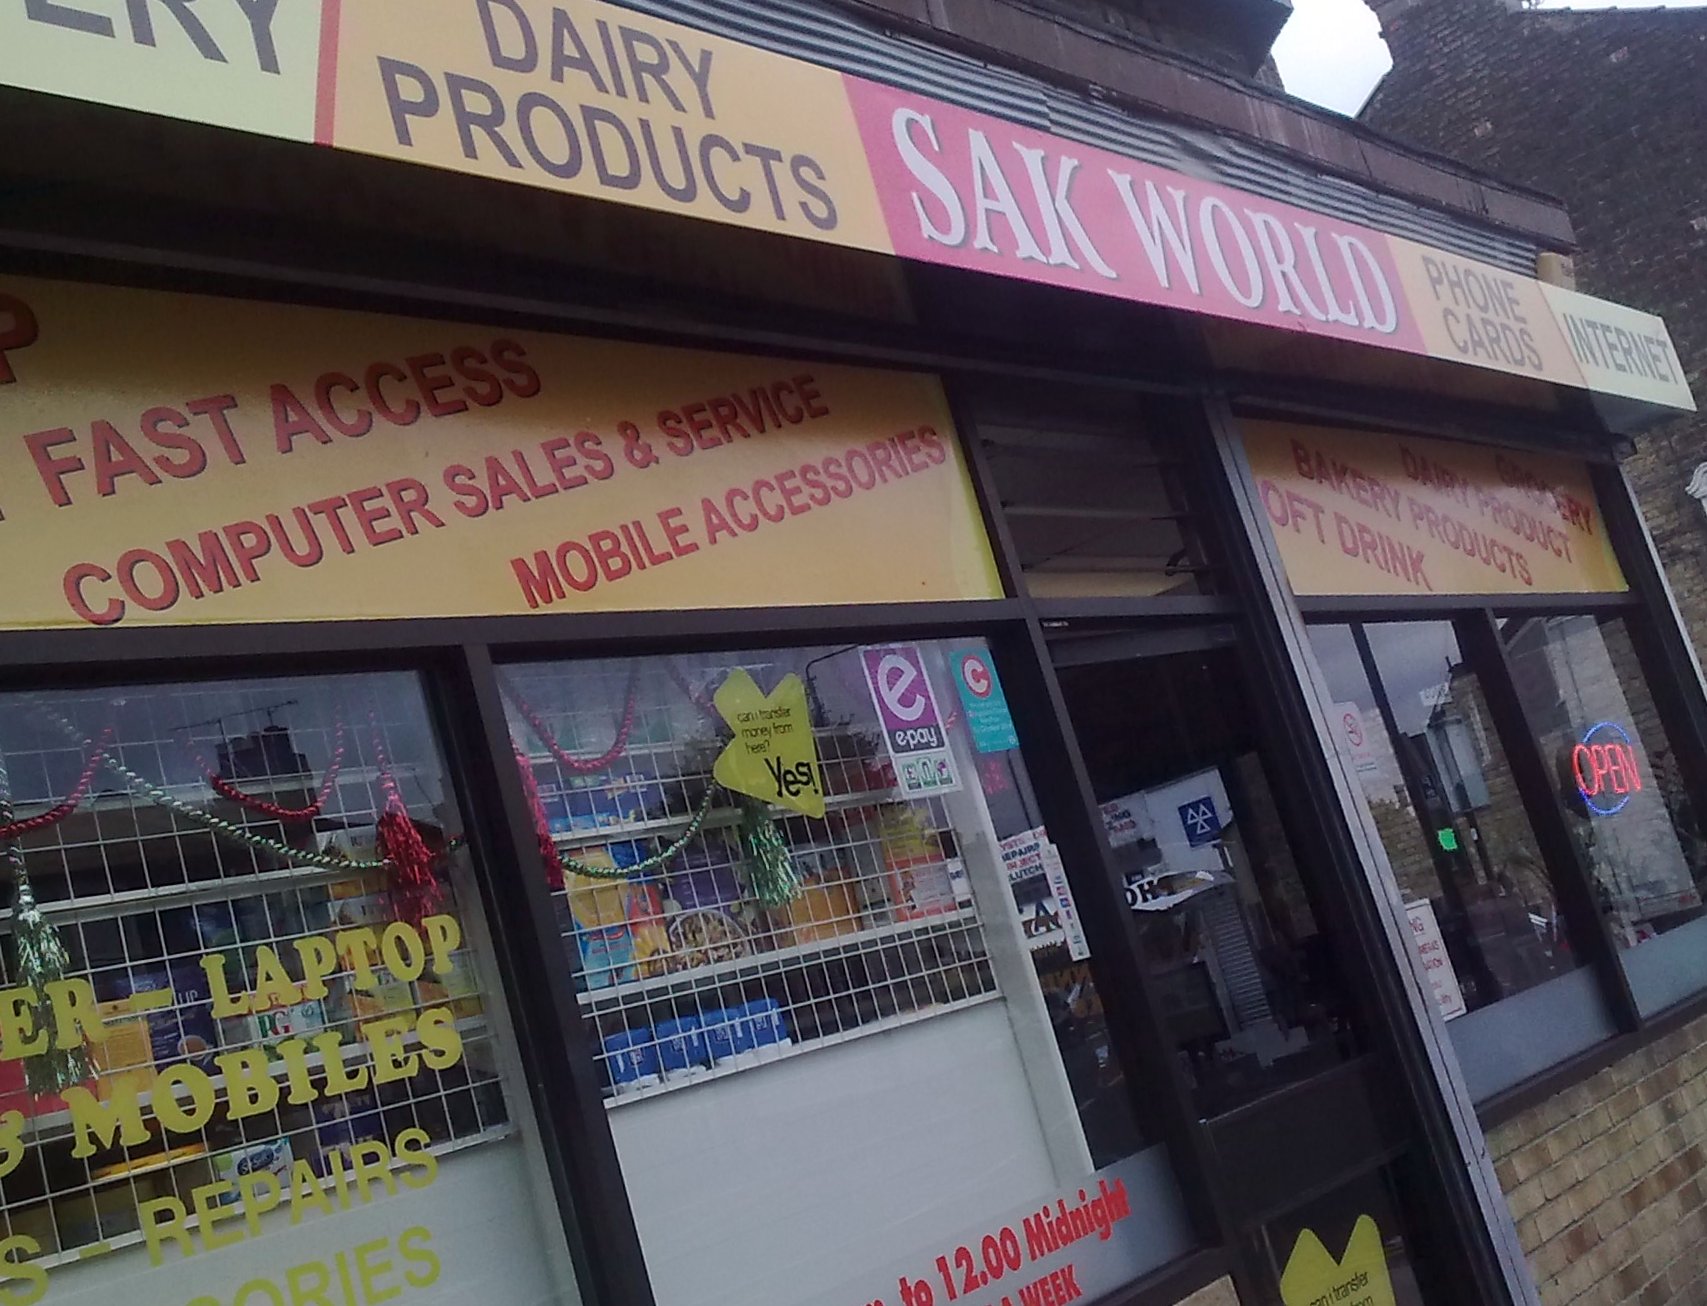 the storefront of an enterprise called sak world